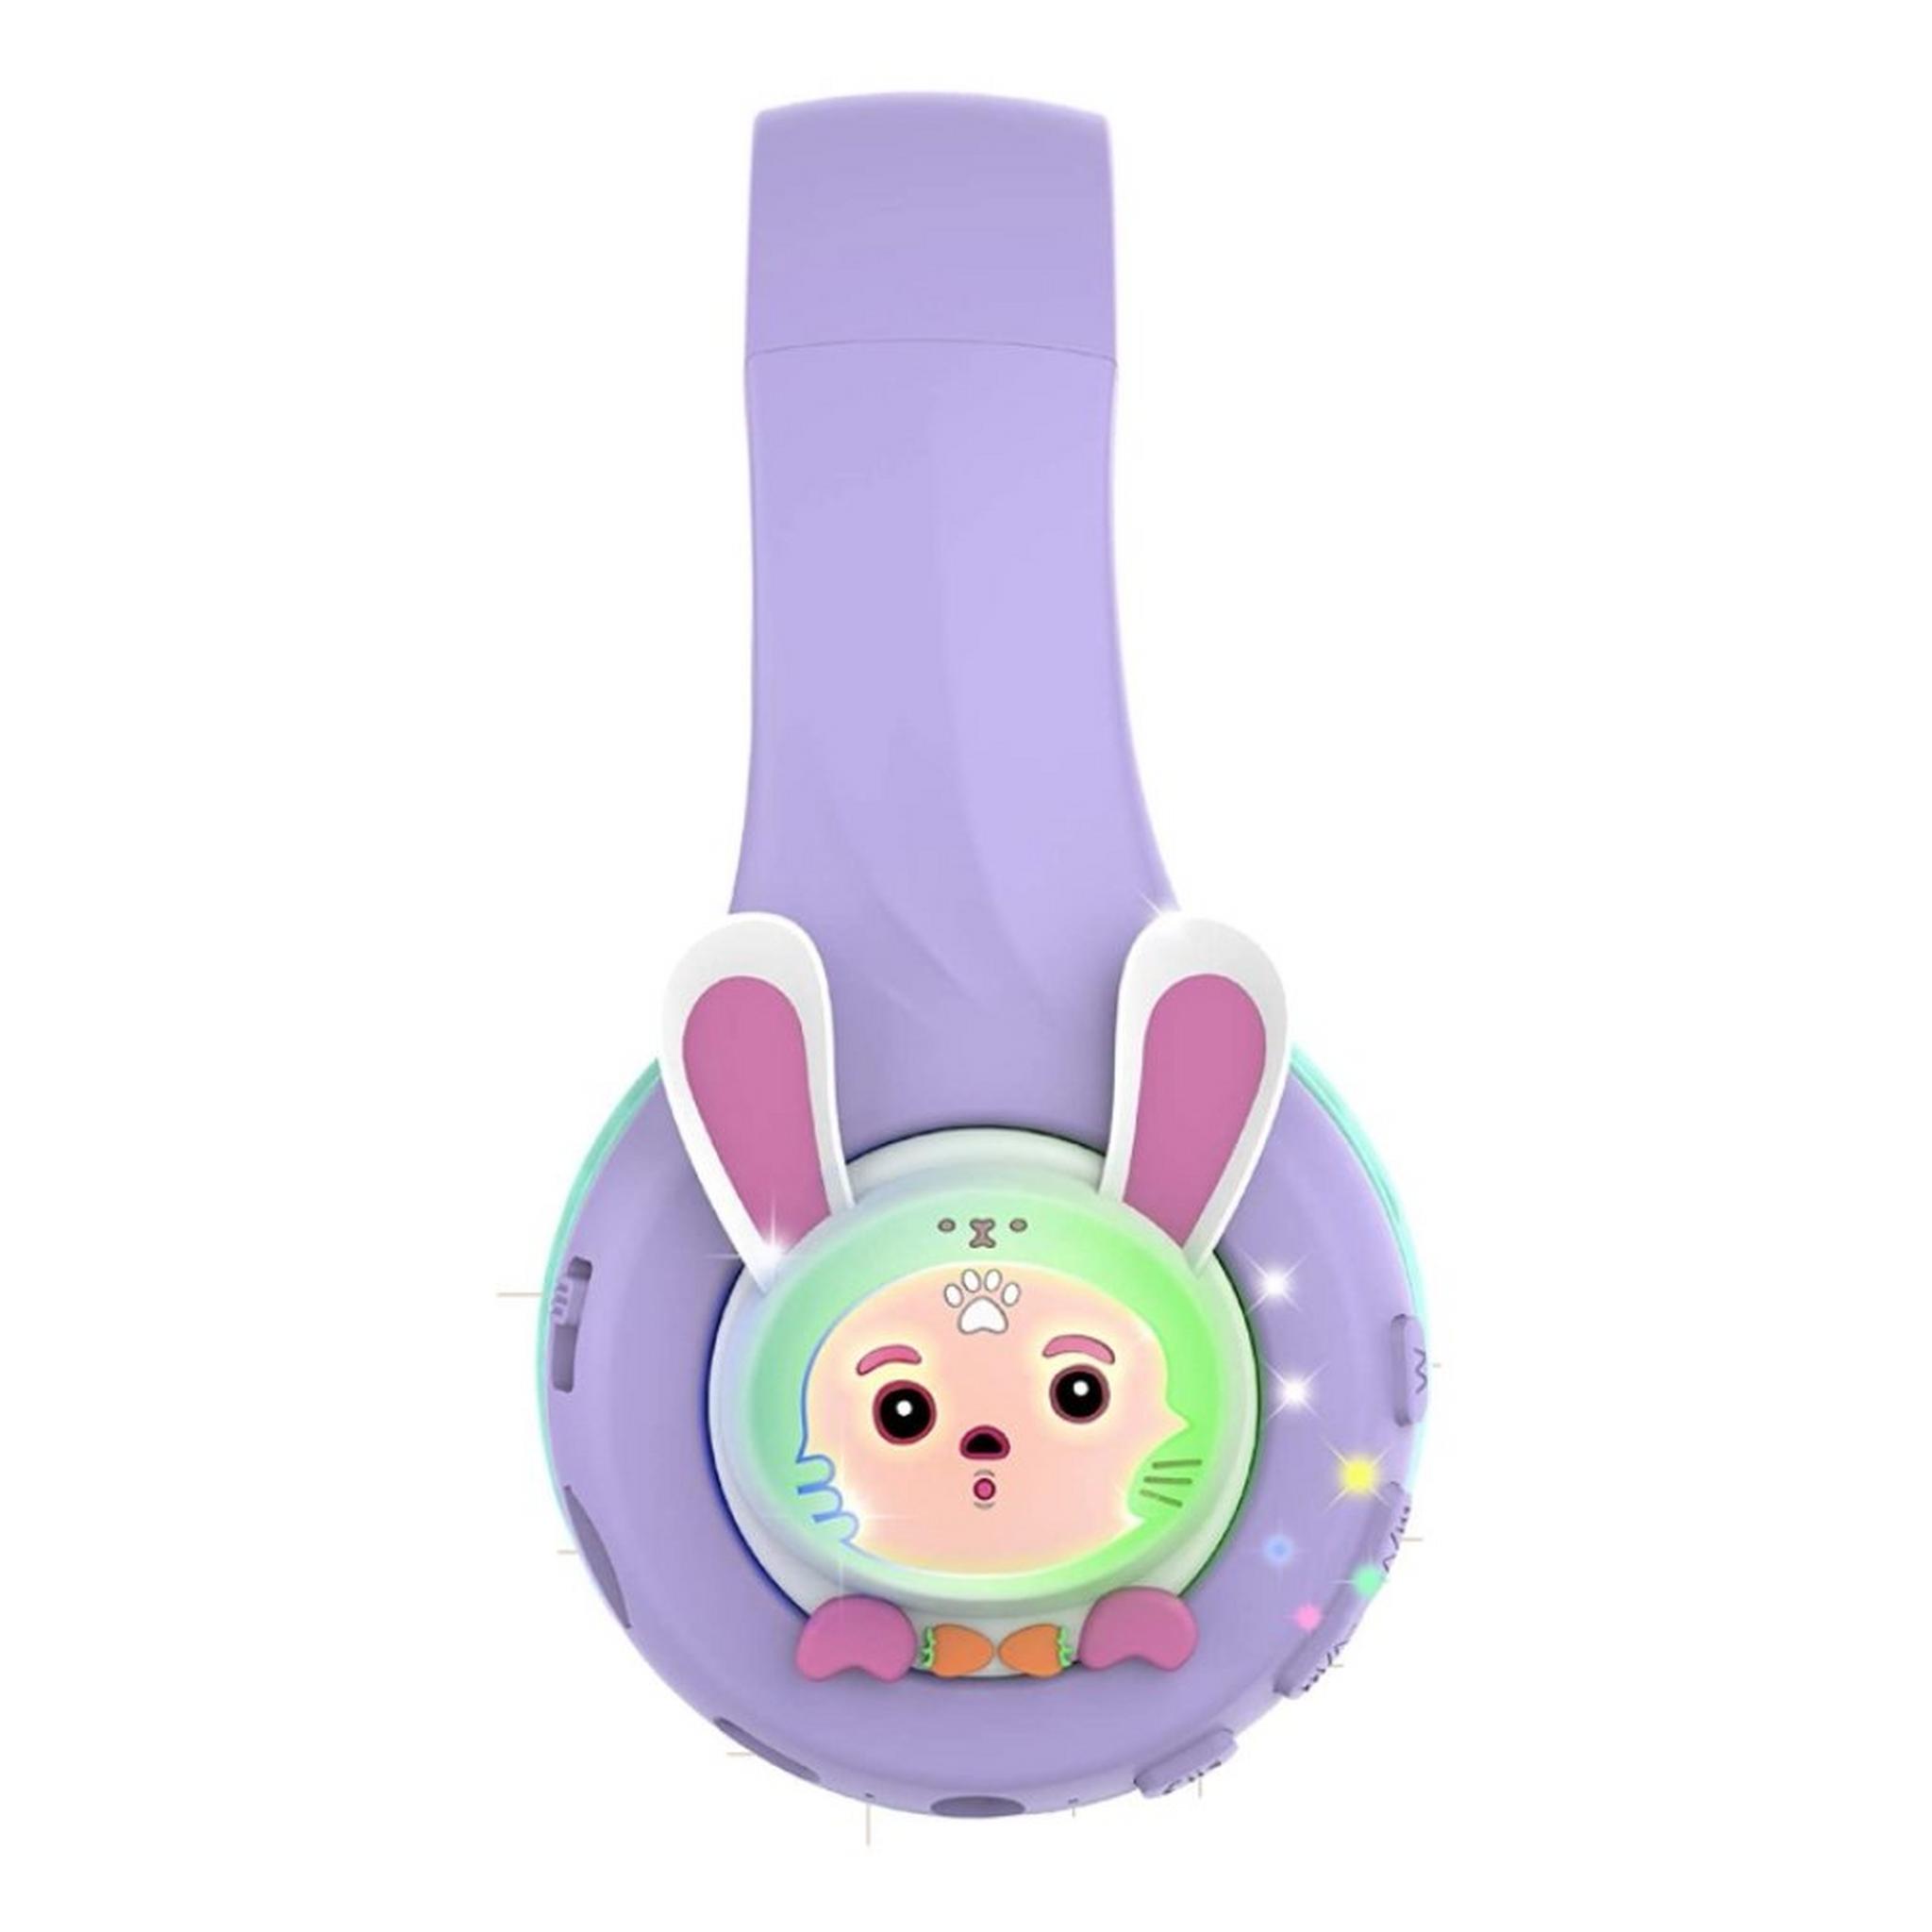 Riwbox Kids Bluetooth Rabbit Headphones - Purple/Green